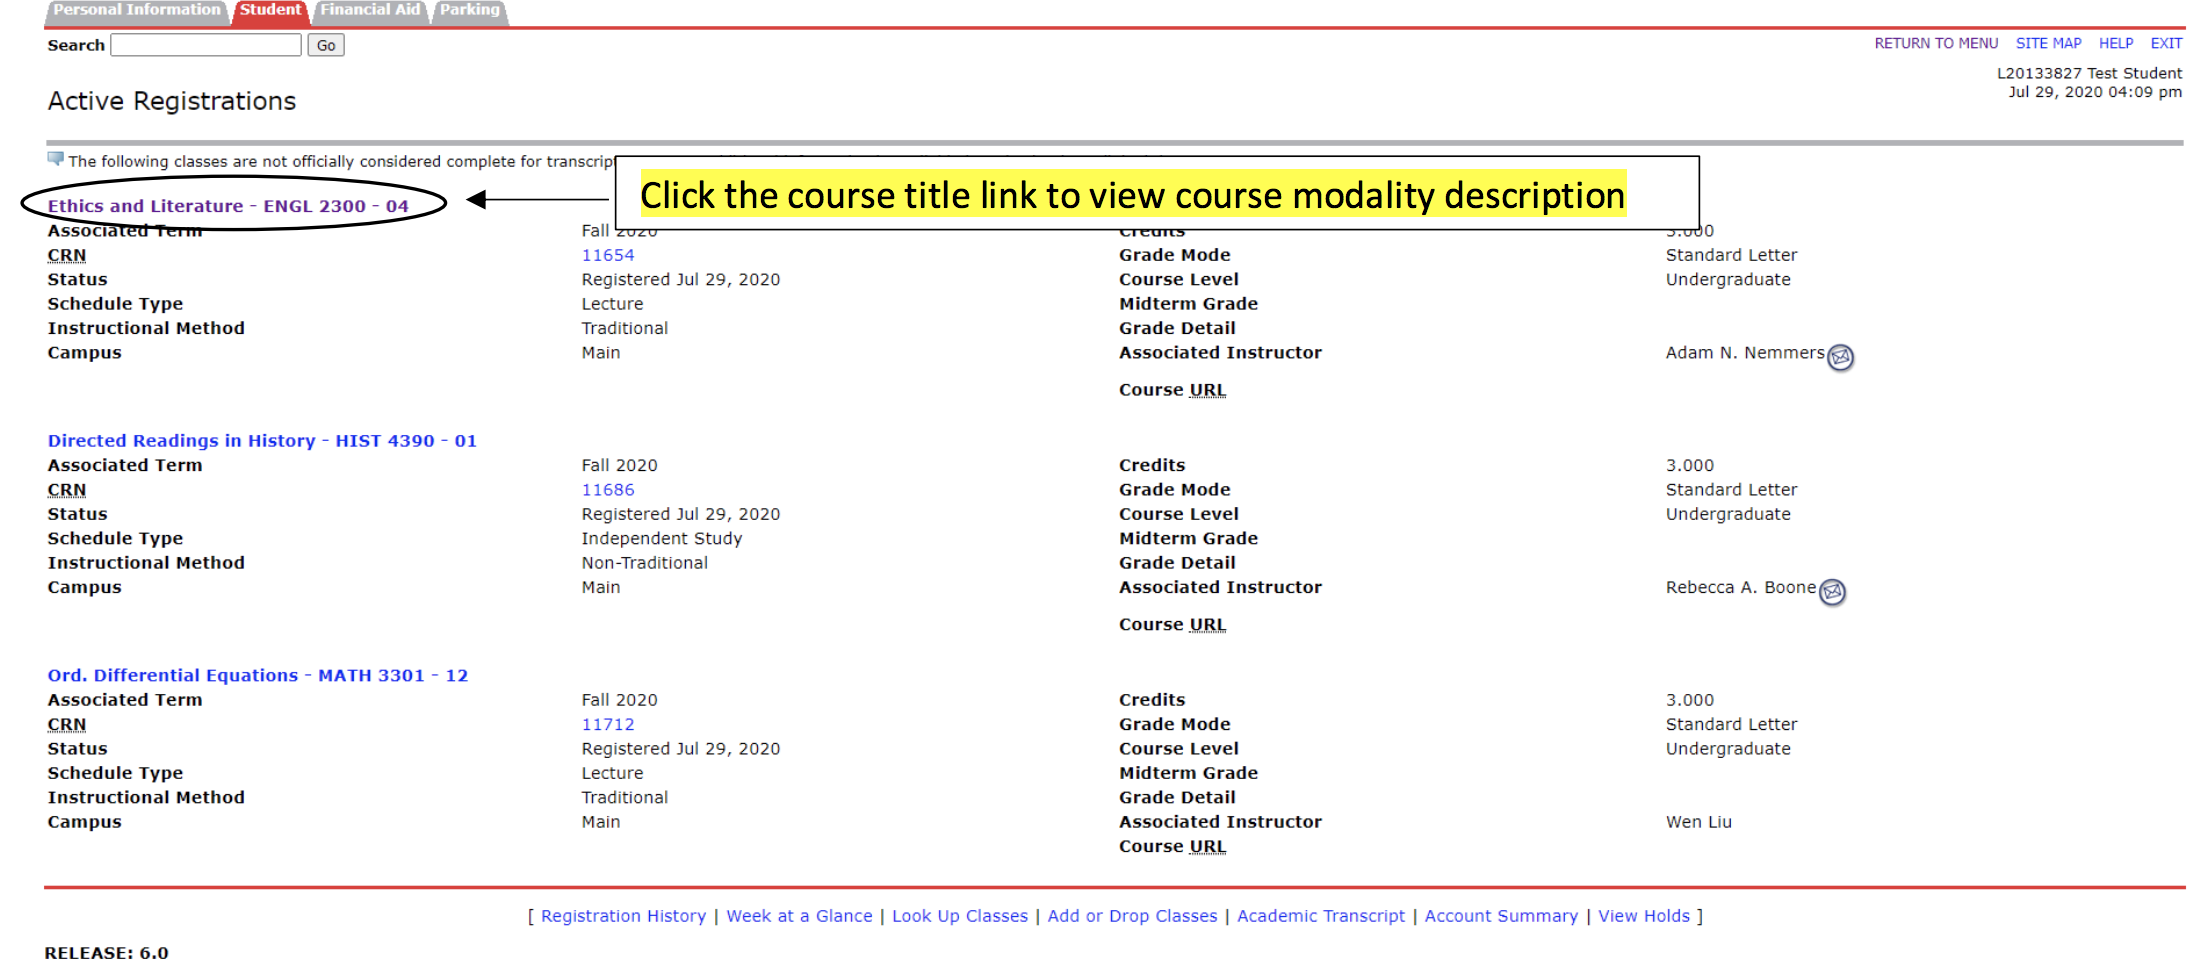 Click Course title link to view course modality description